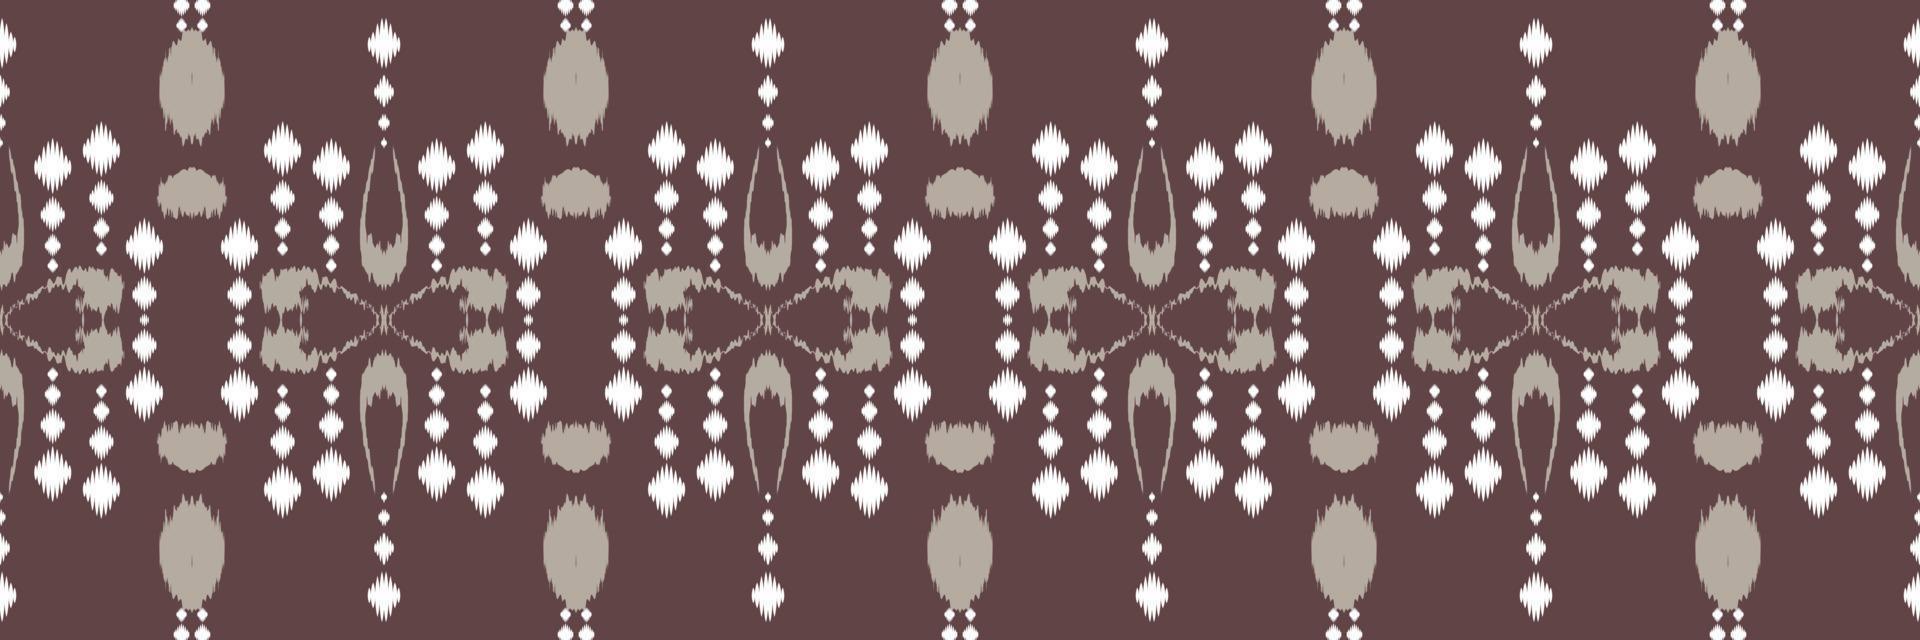 Batik Textile Ethnic ikat floral seamless pattern digital vector design for Print saree Kurti Borneo Fabric border brush symbols swatches party wear